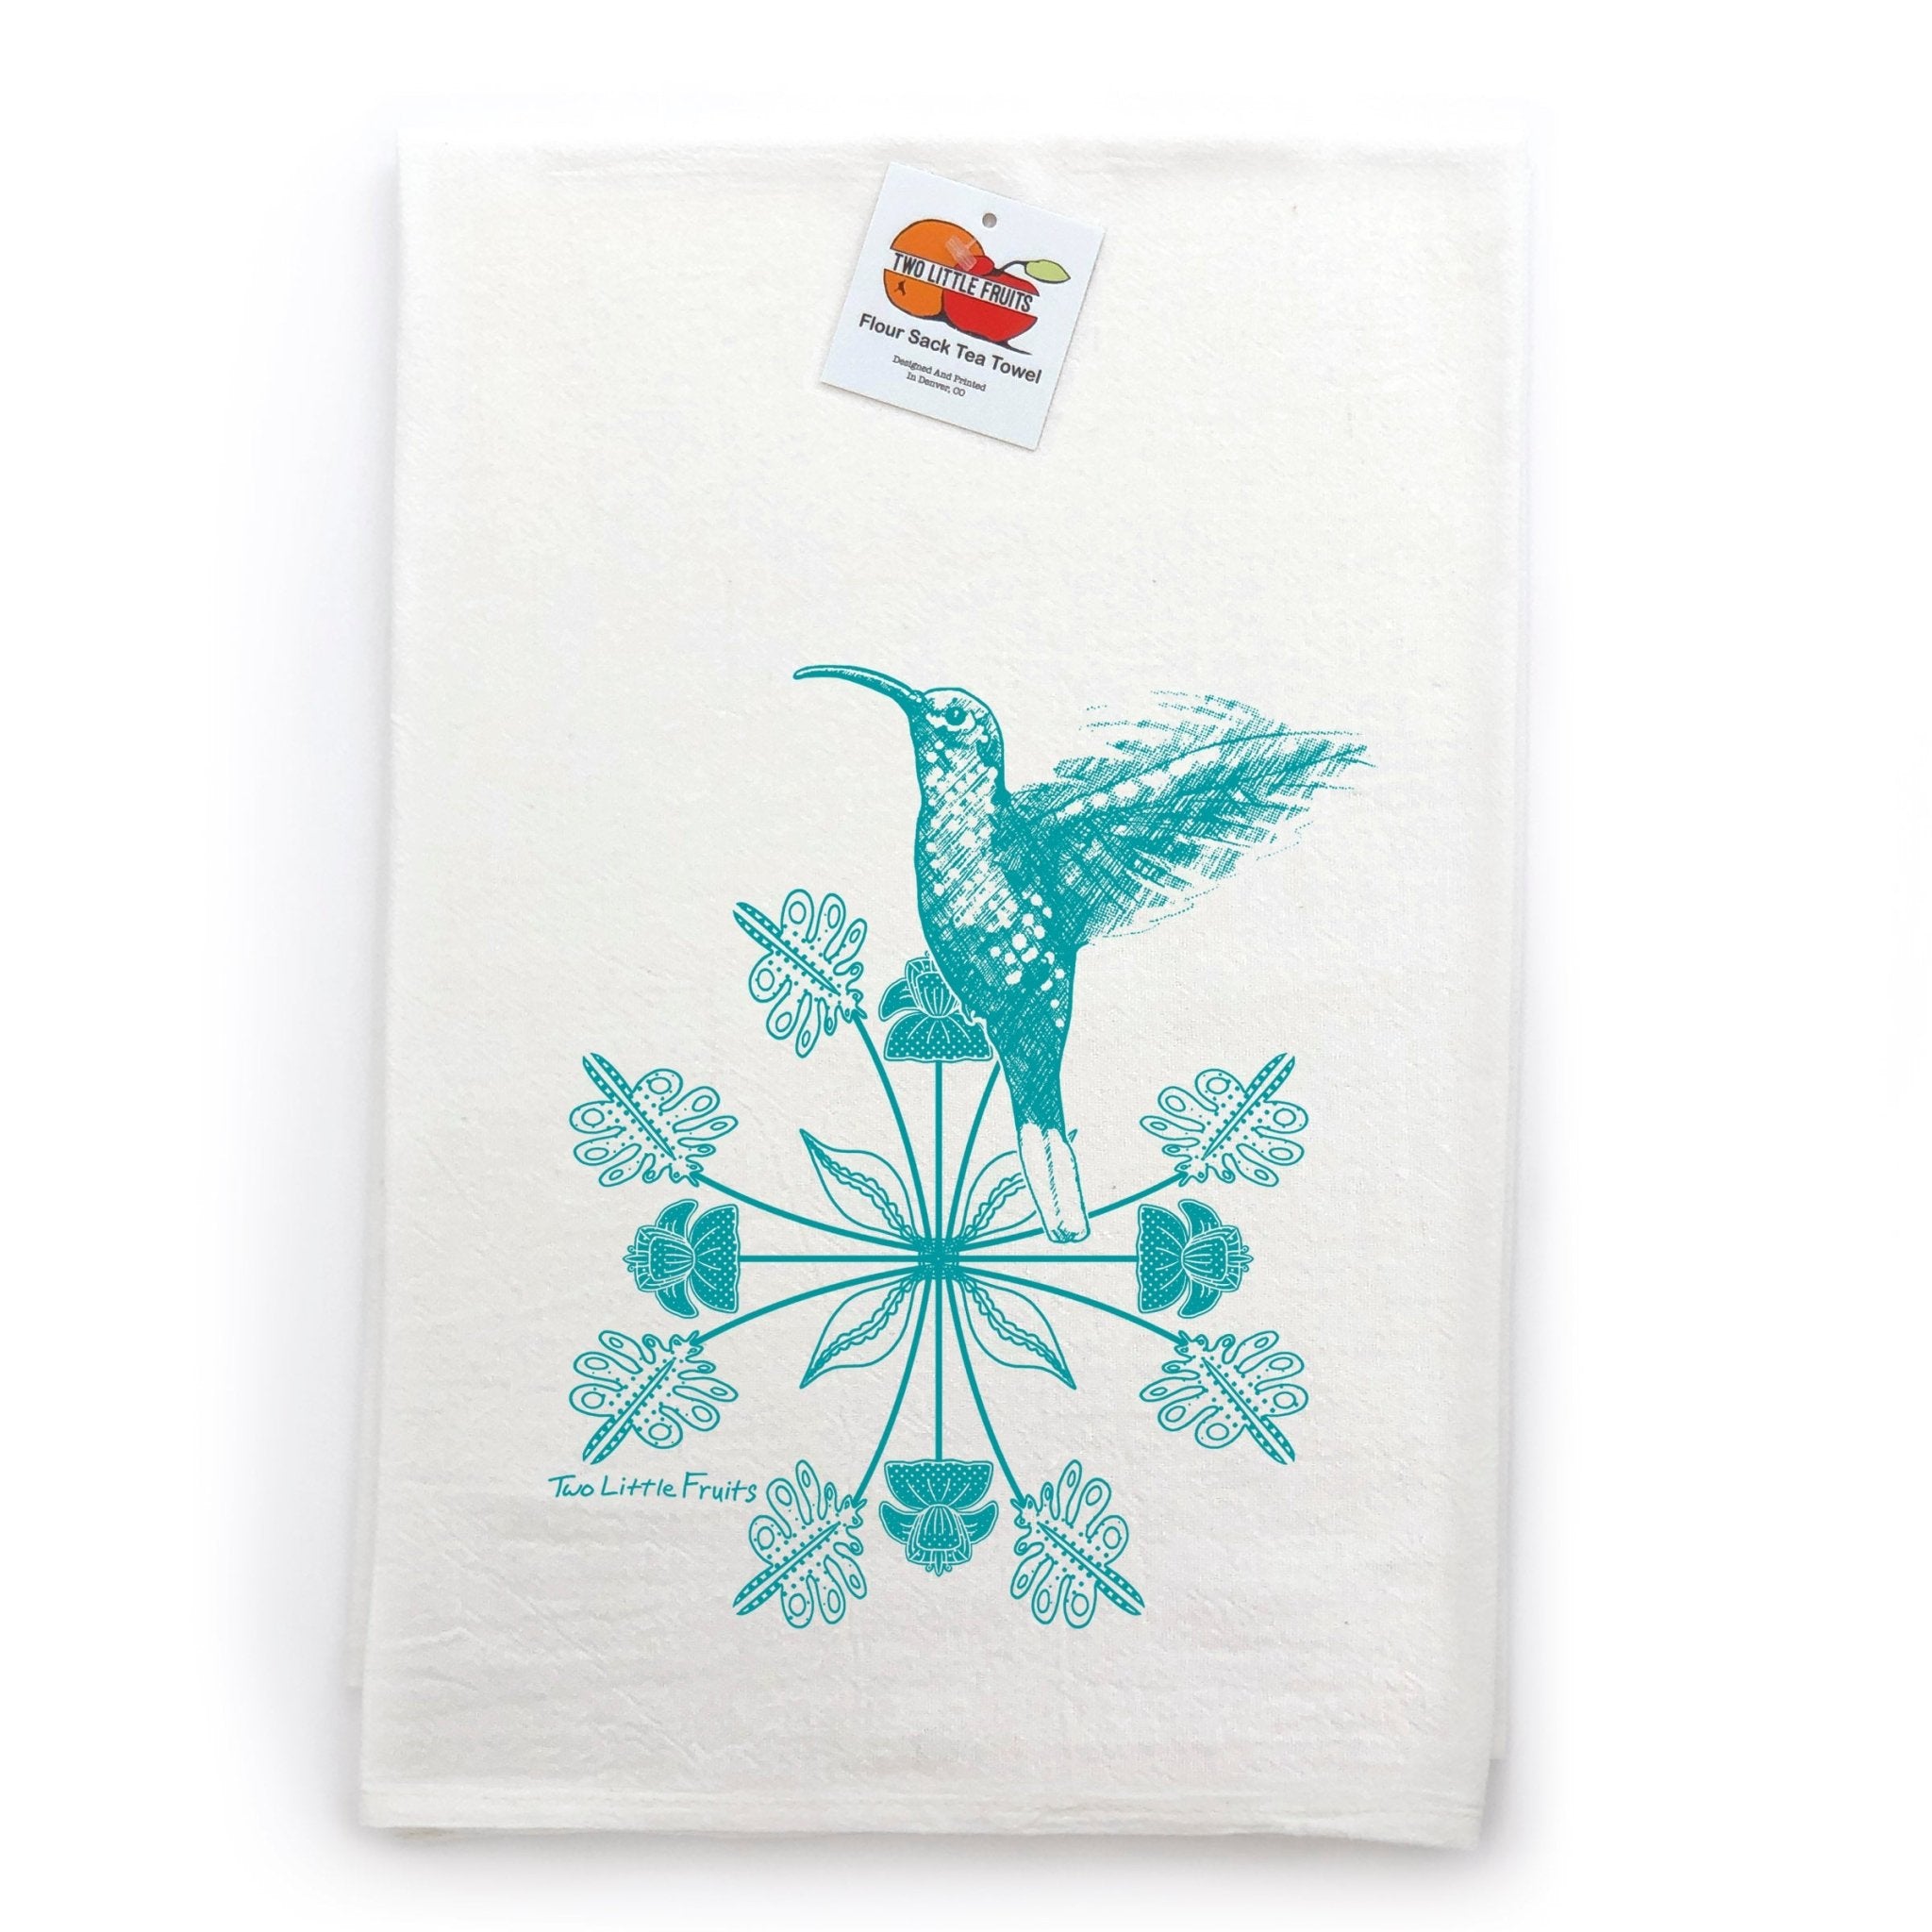 Hummingbird Tea Towel - Tea Towels - Two Little Fruits - Two Little Fruits